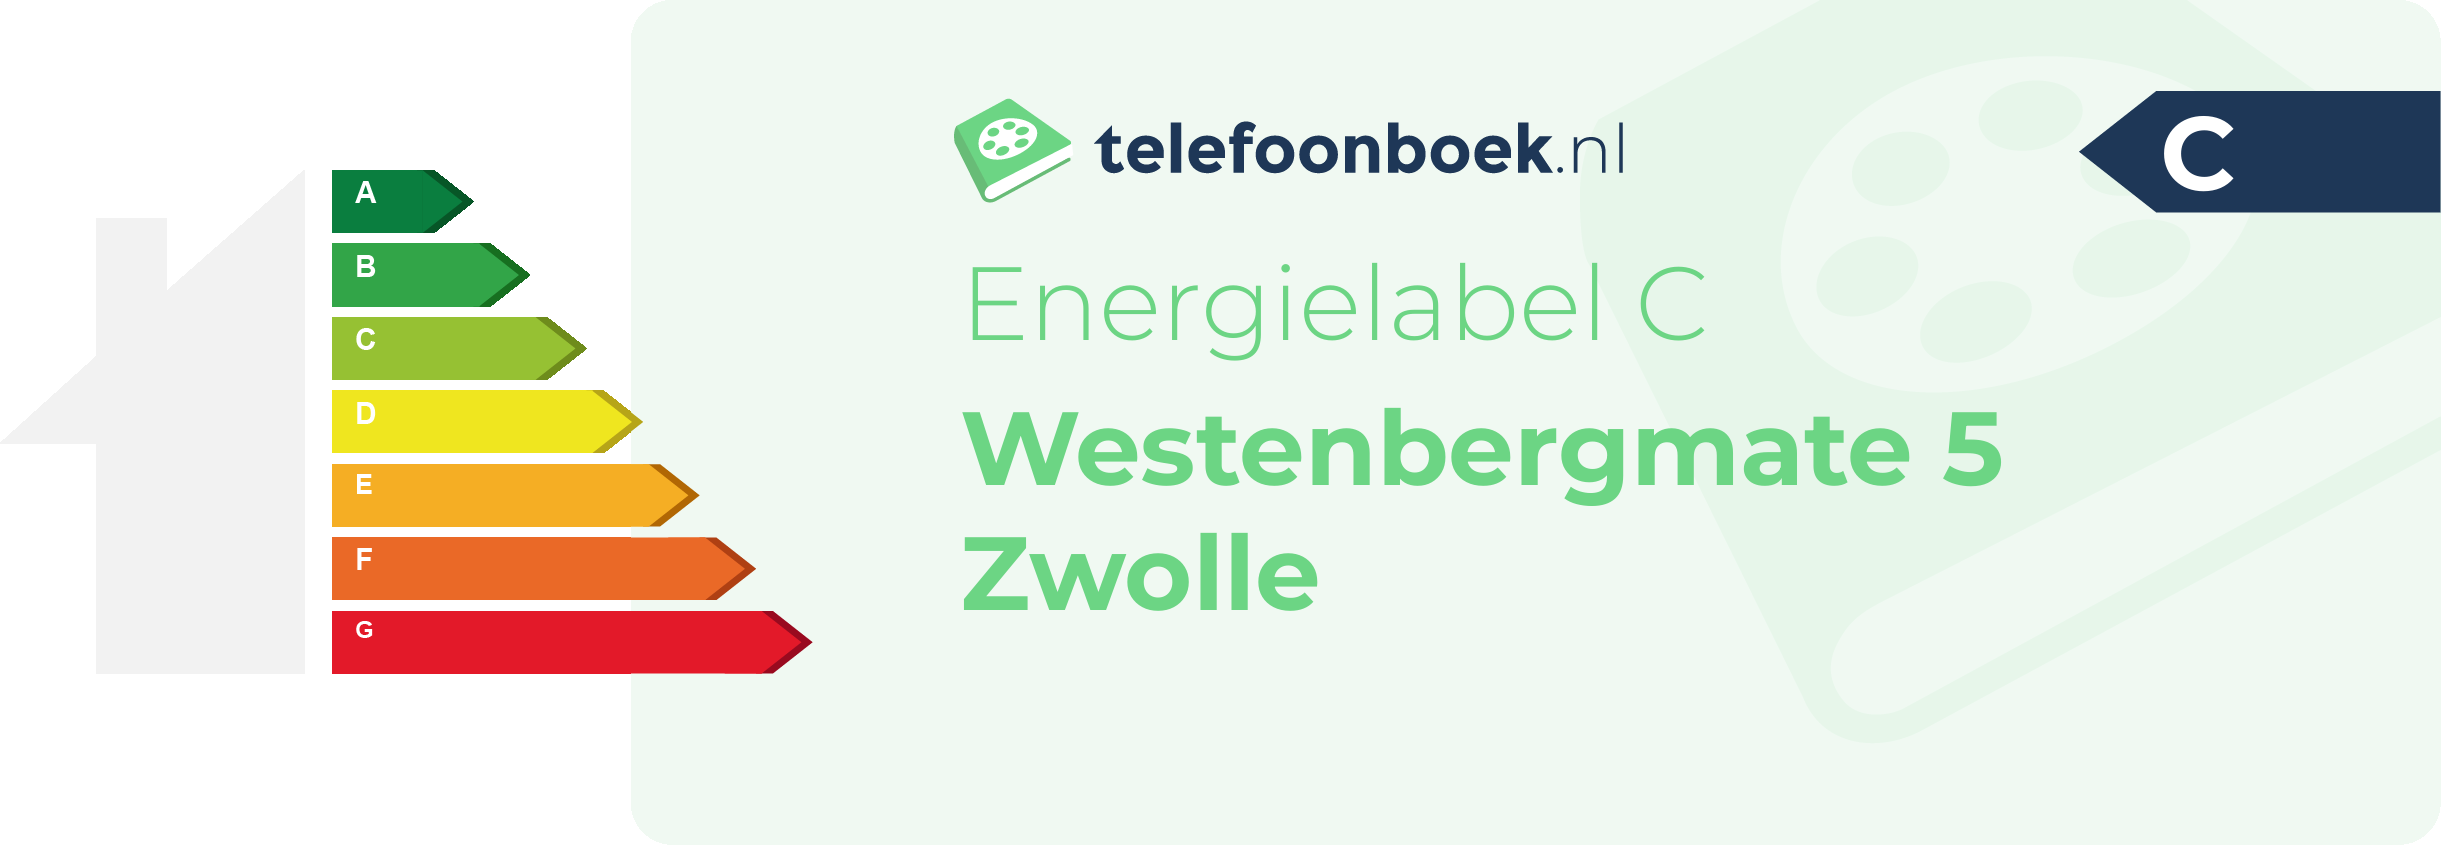 Energielabel Westenbergmate 5 Zwolle